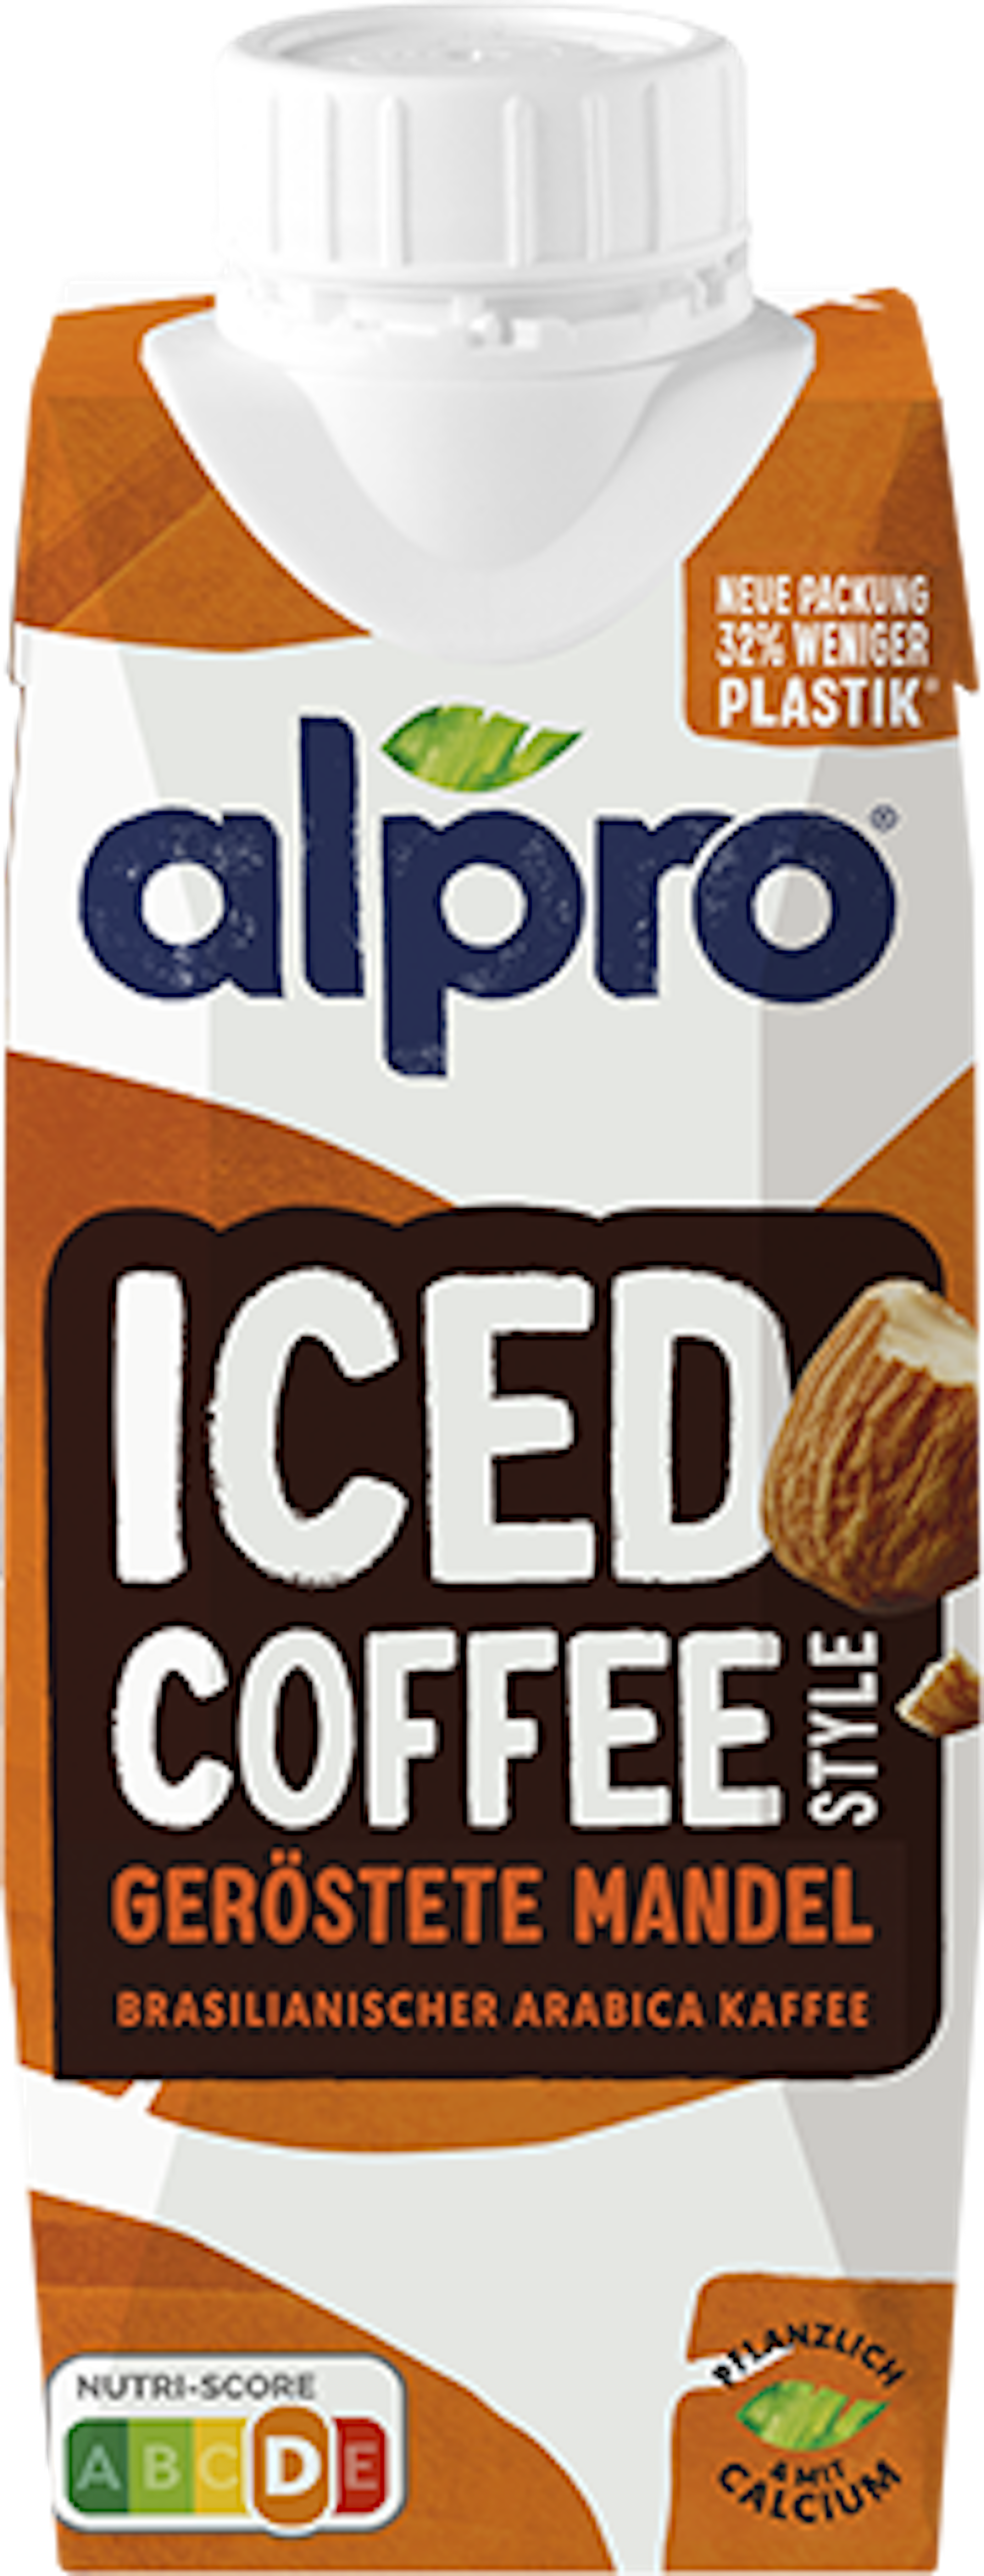 Iced Coffee geröstete Mandel